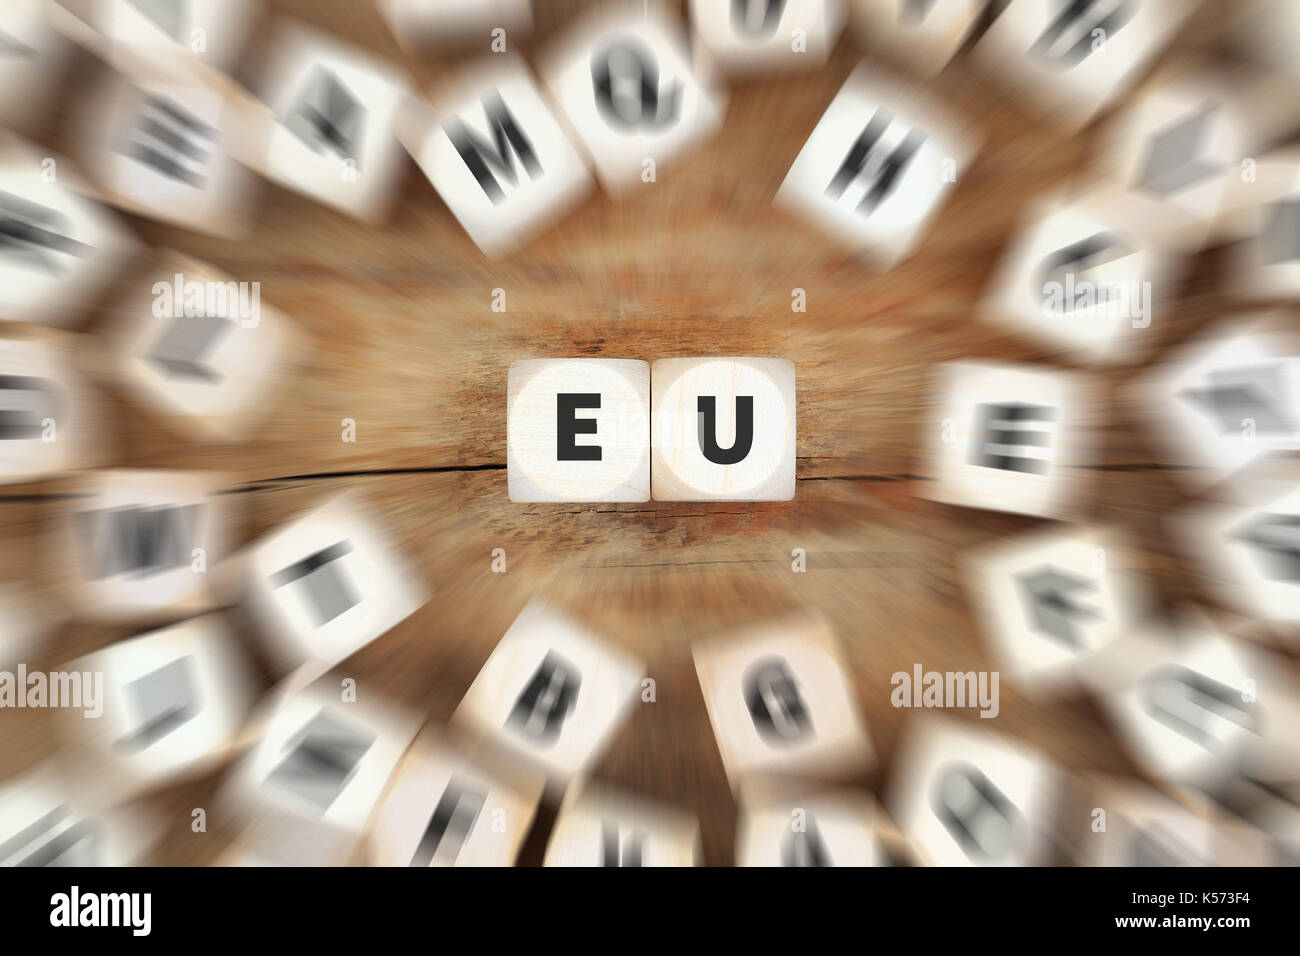 EU Europe European Union crisis dice business concept idea Stock Photo